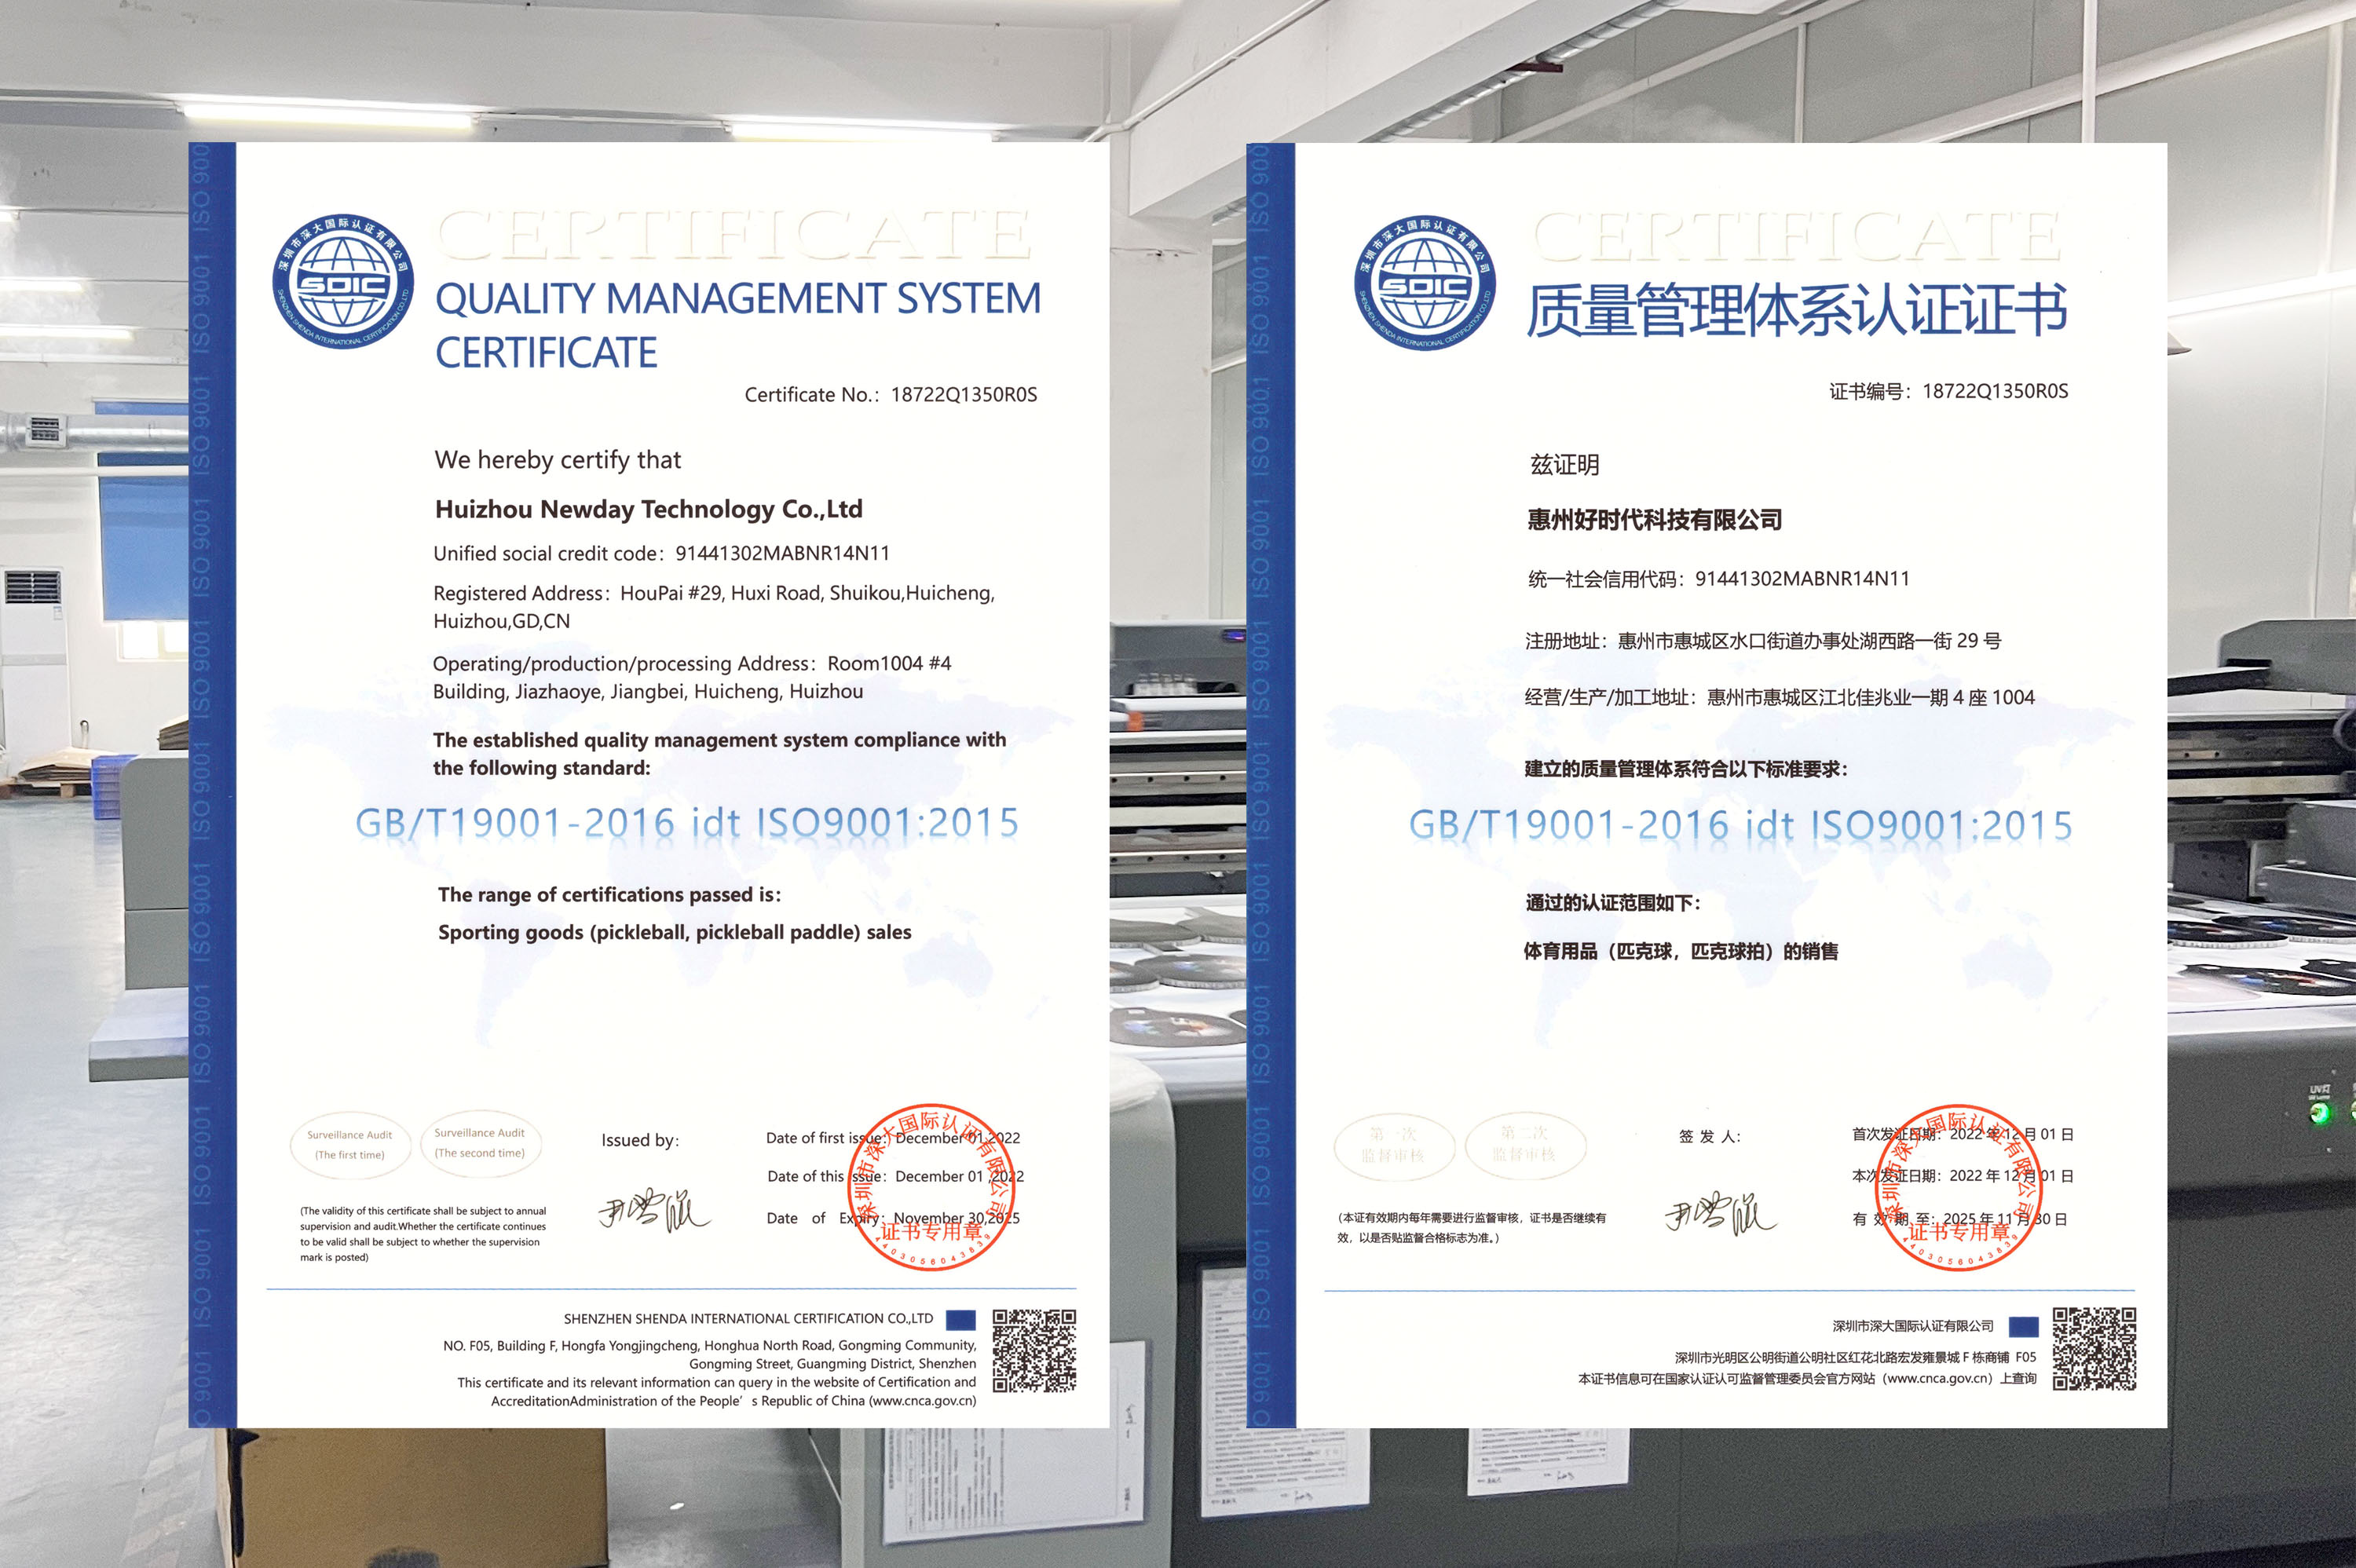 ISO9001-certifikat, vi har det!